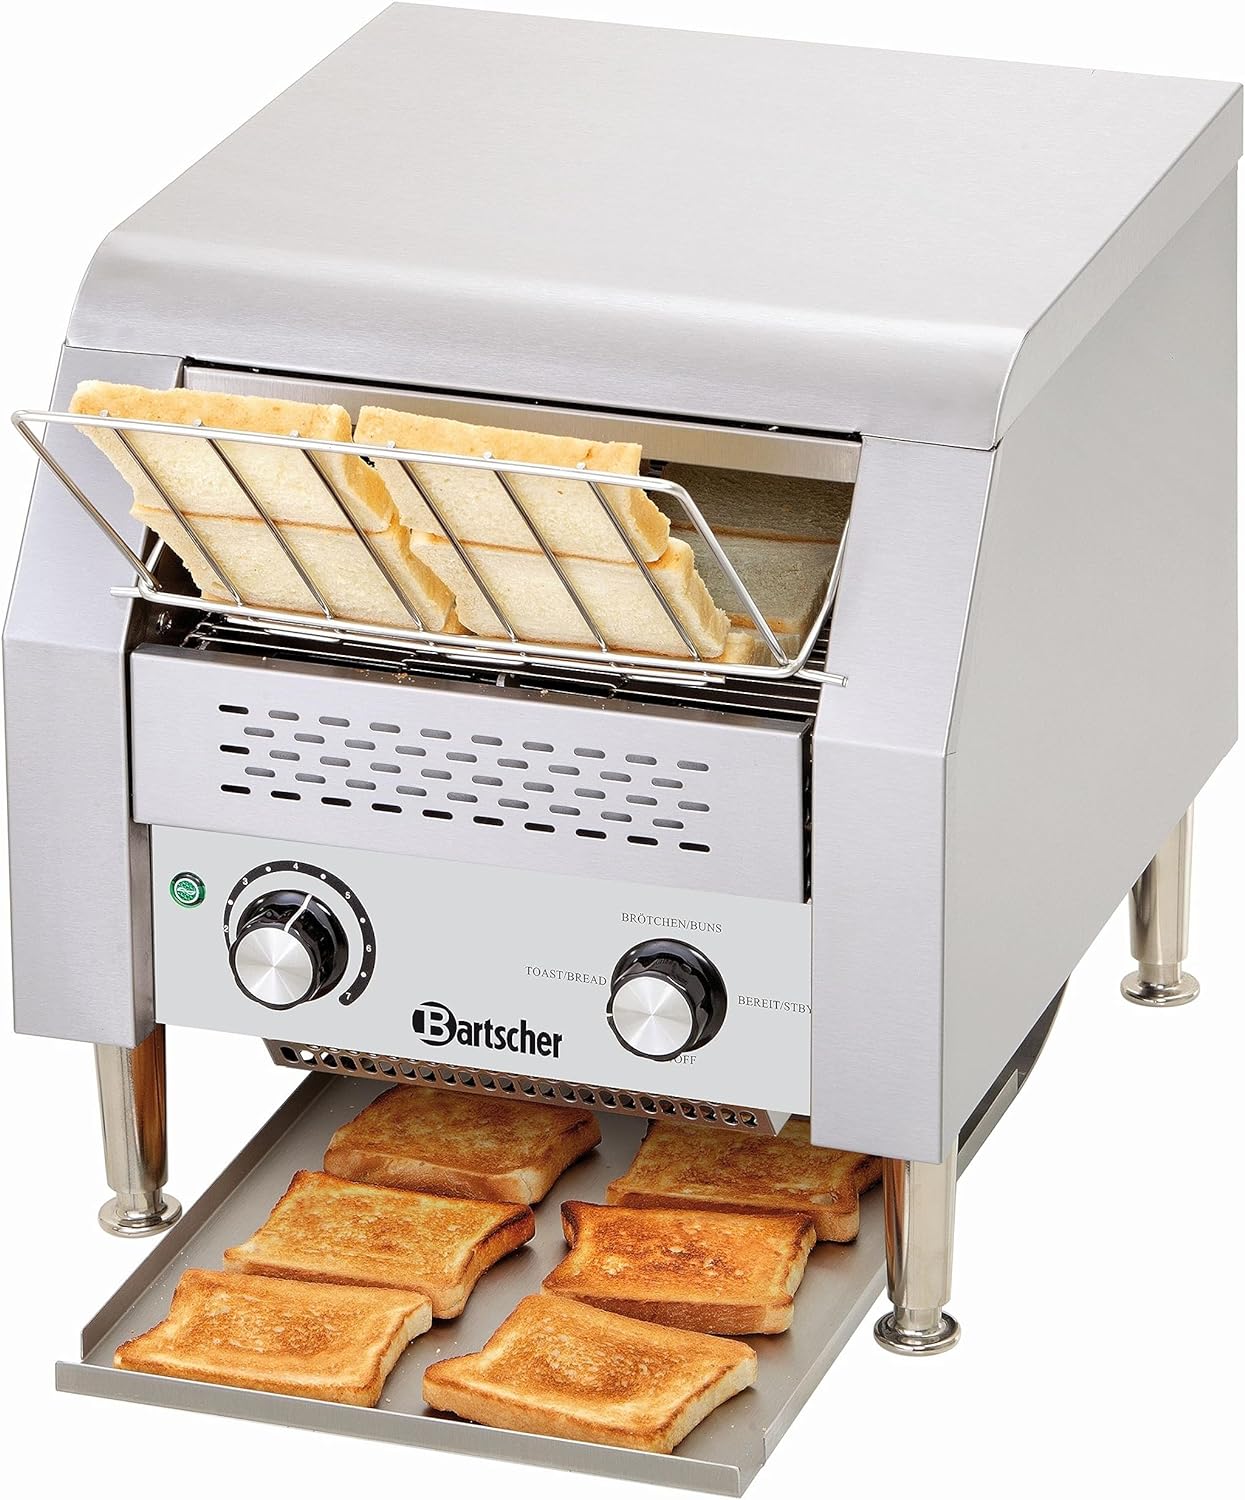 Conveyor toaster